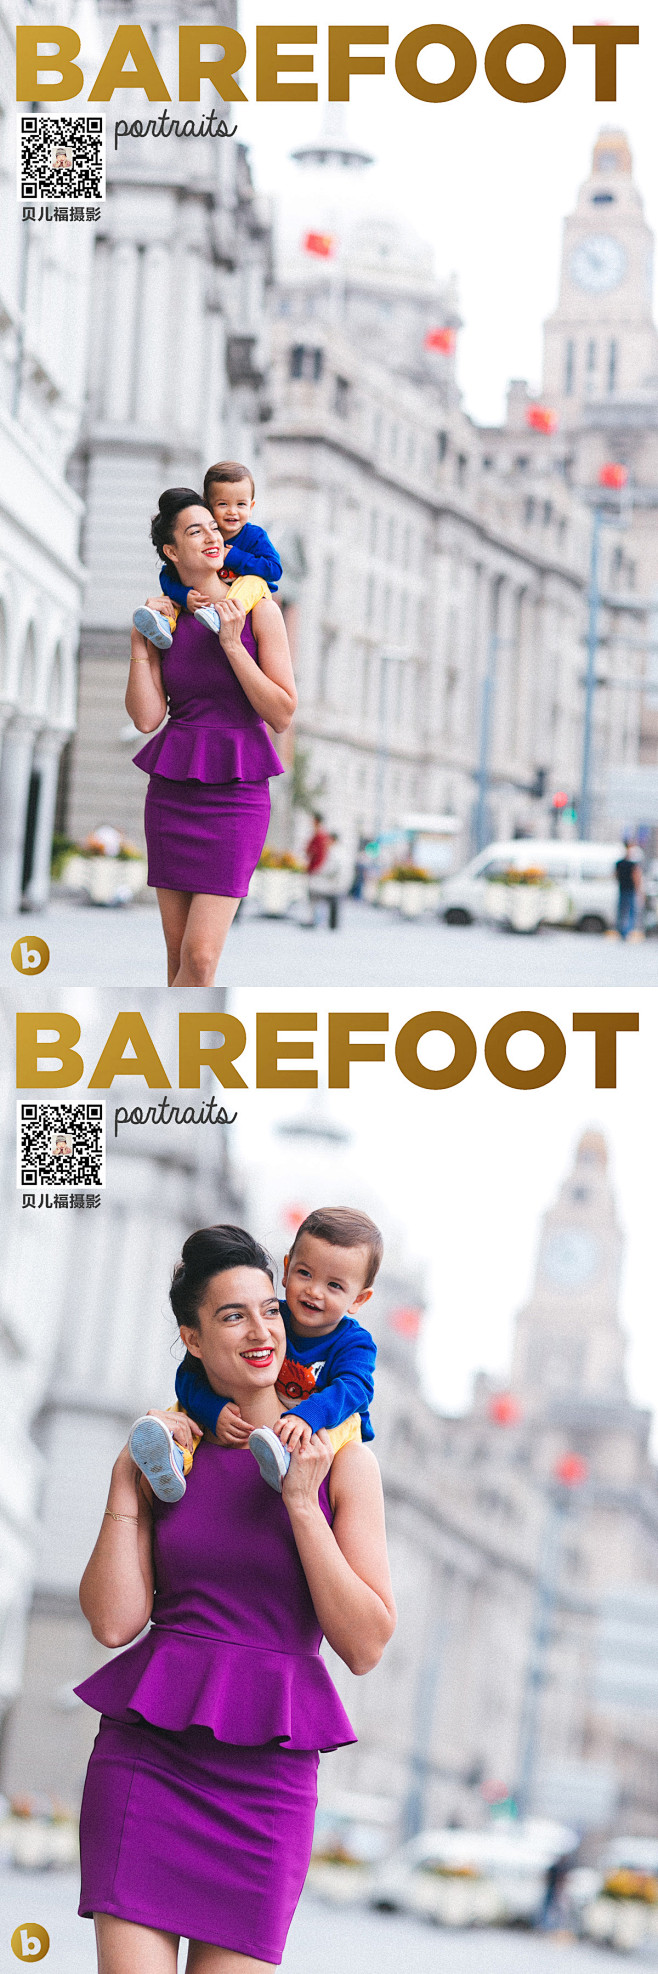 barefootportraits ph...